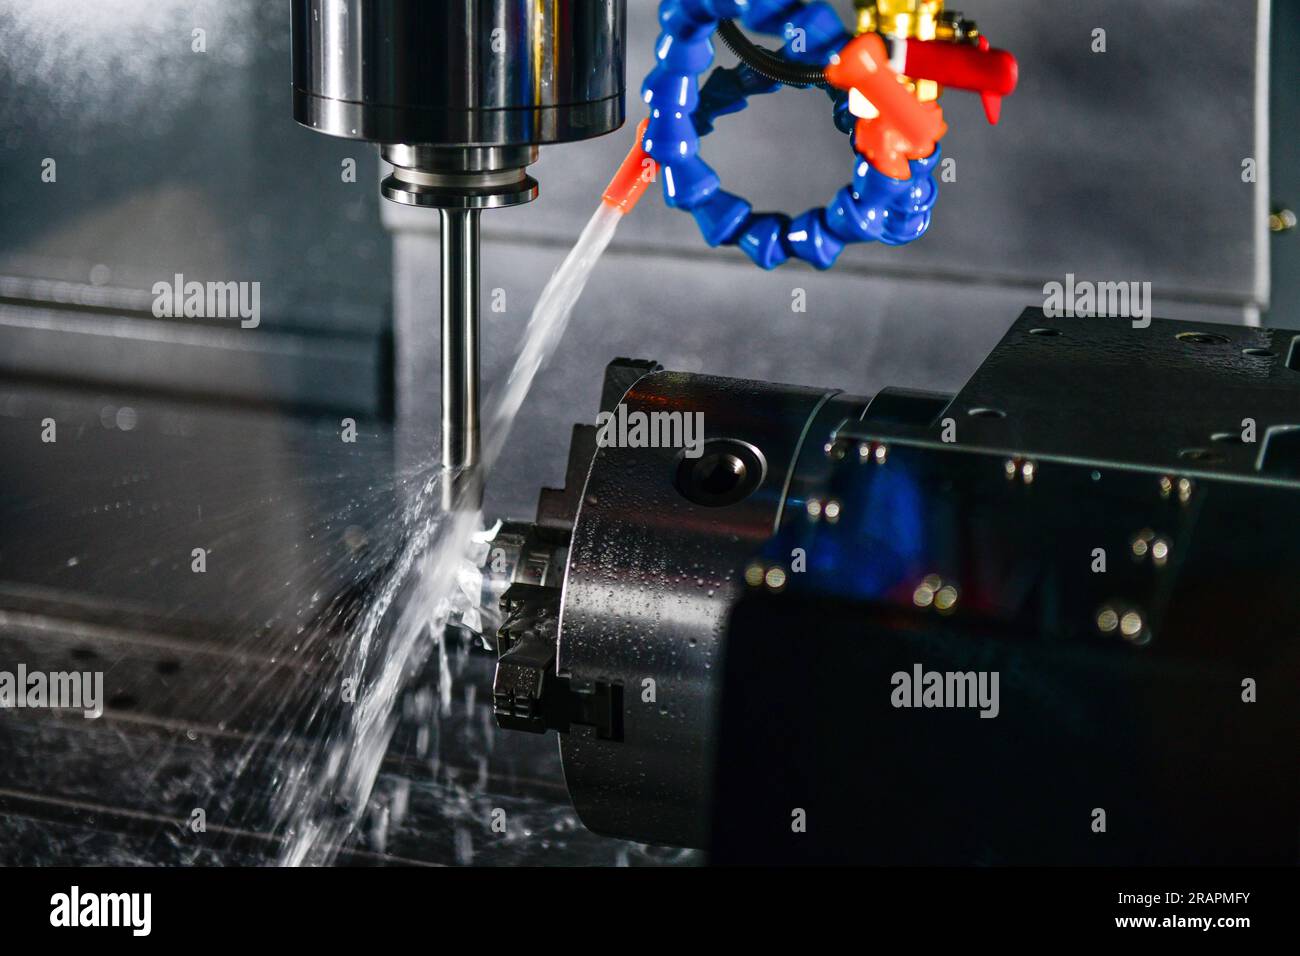 Metalworking CNC milling machine. Cutting metal modern processing Hi-technology machining concept. Stock Photo